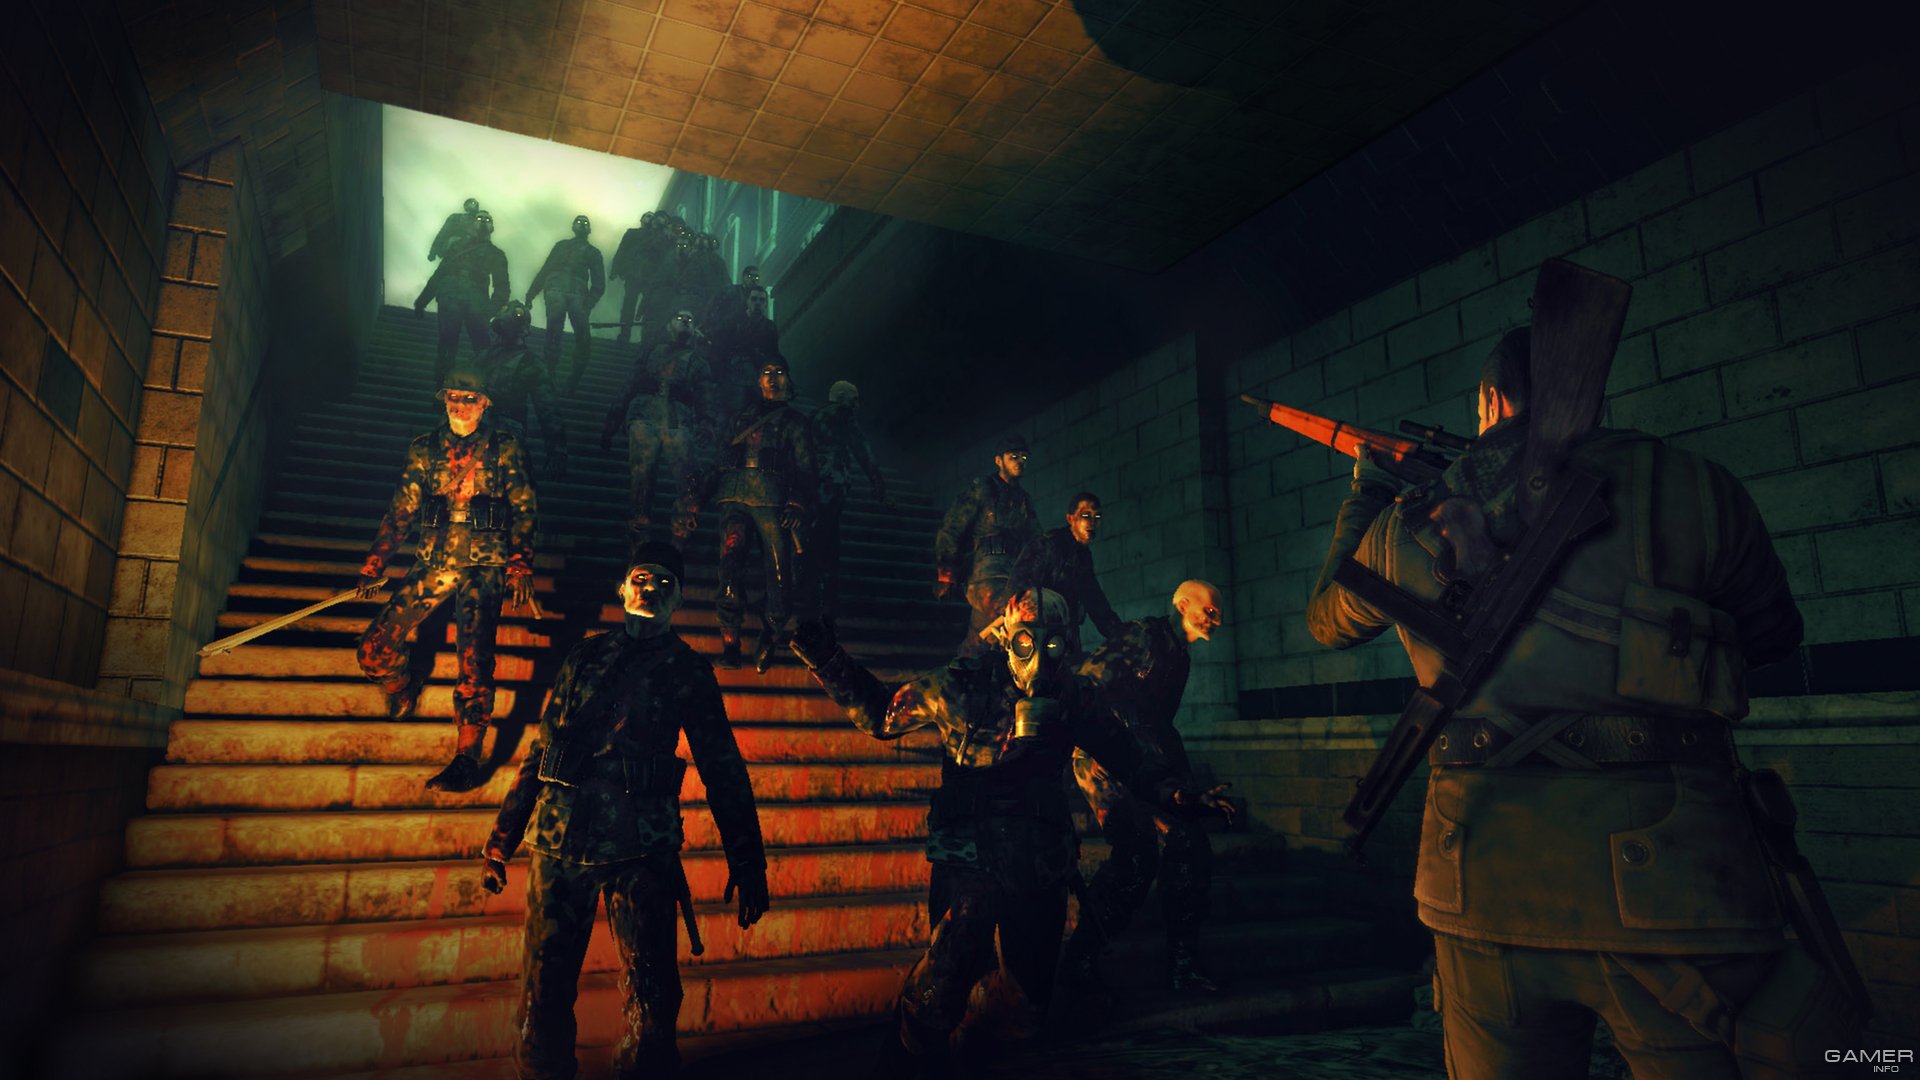 download Sniper Elite: Nazi Zombie Army